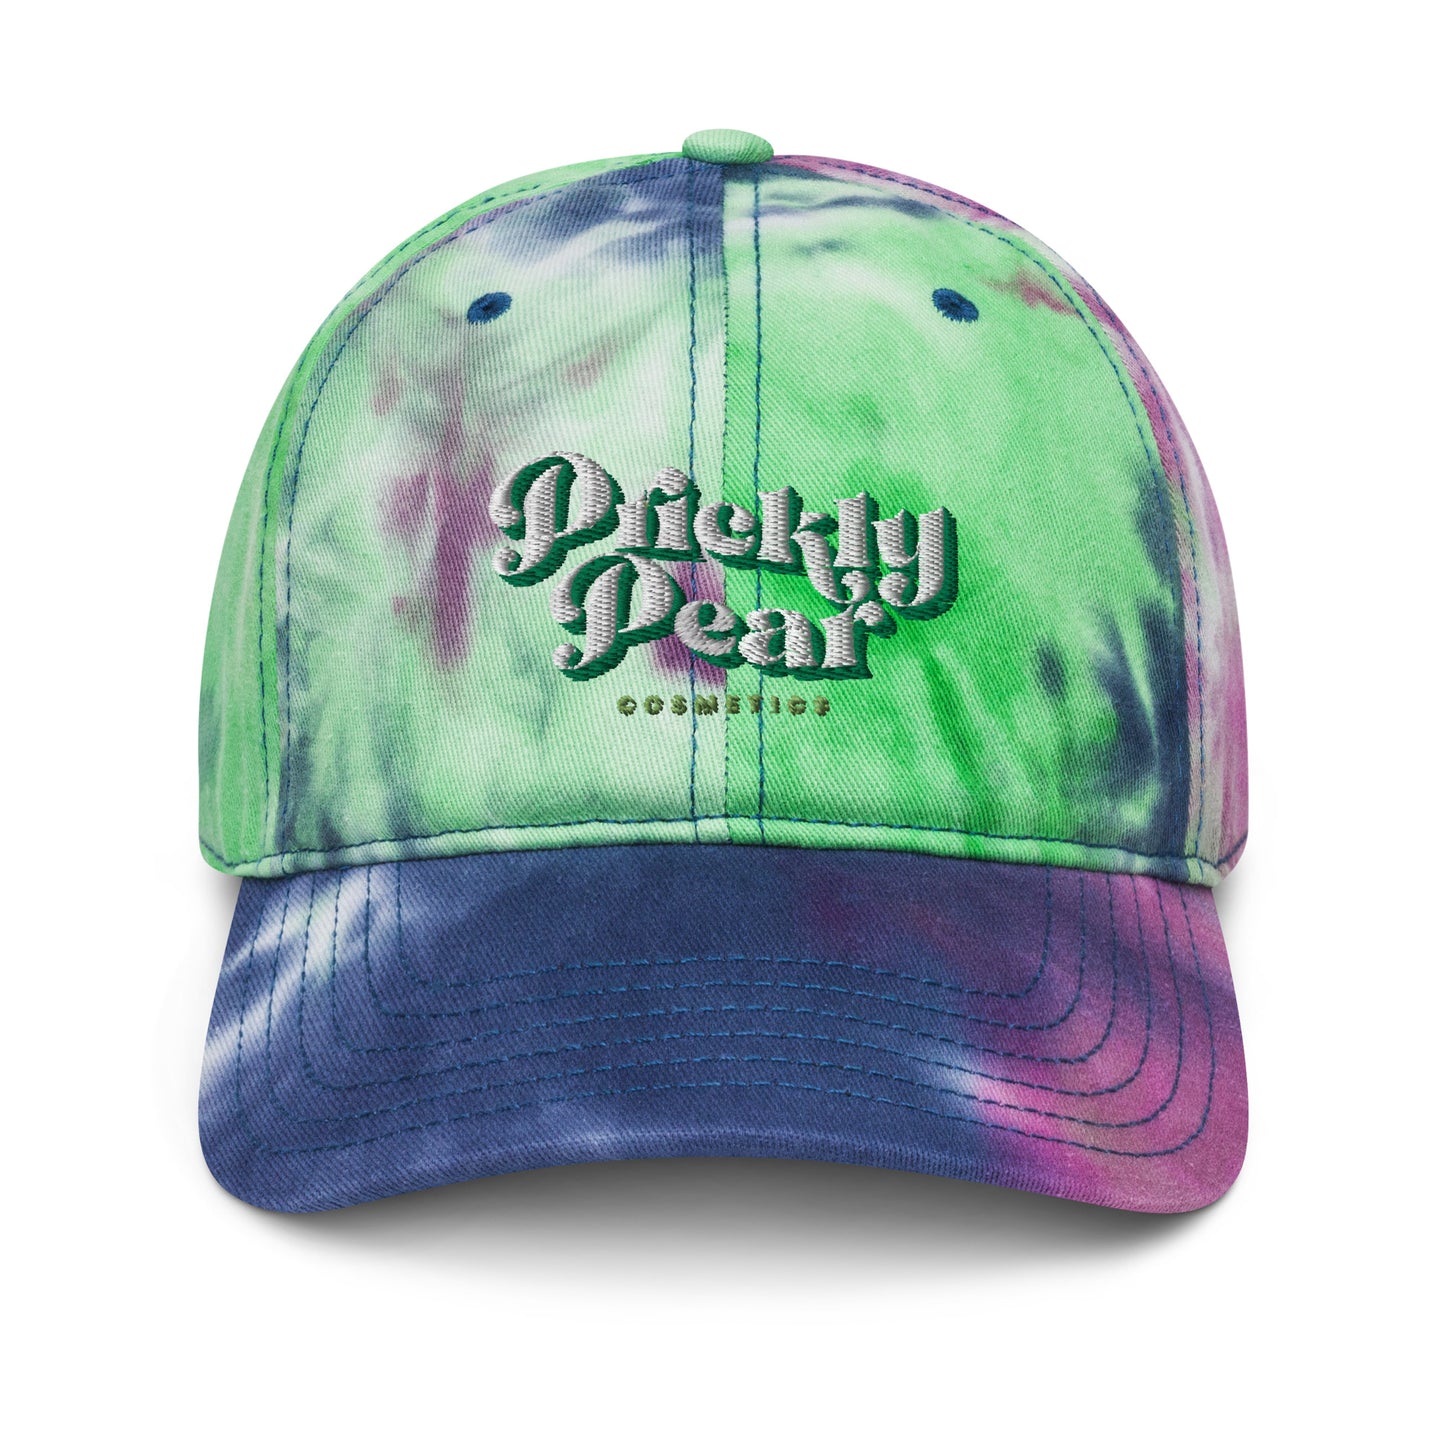 Tie-Dye Prickly Pear Logo Hat